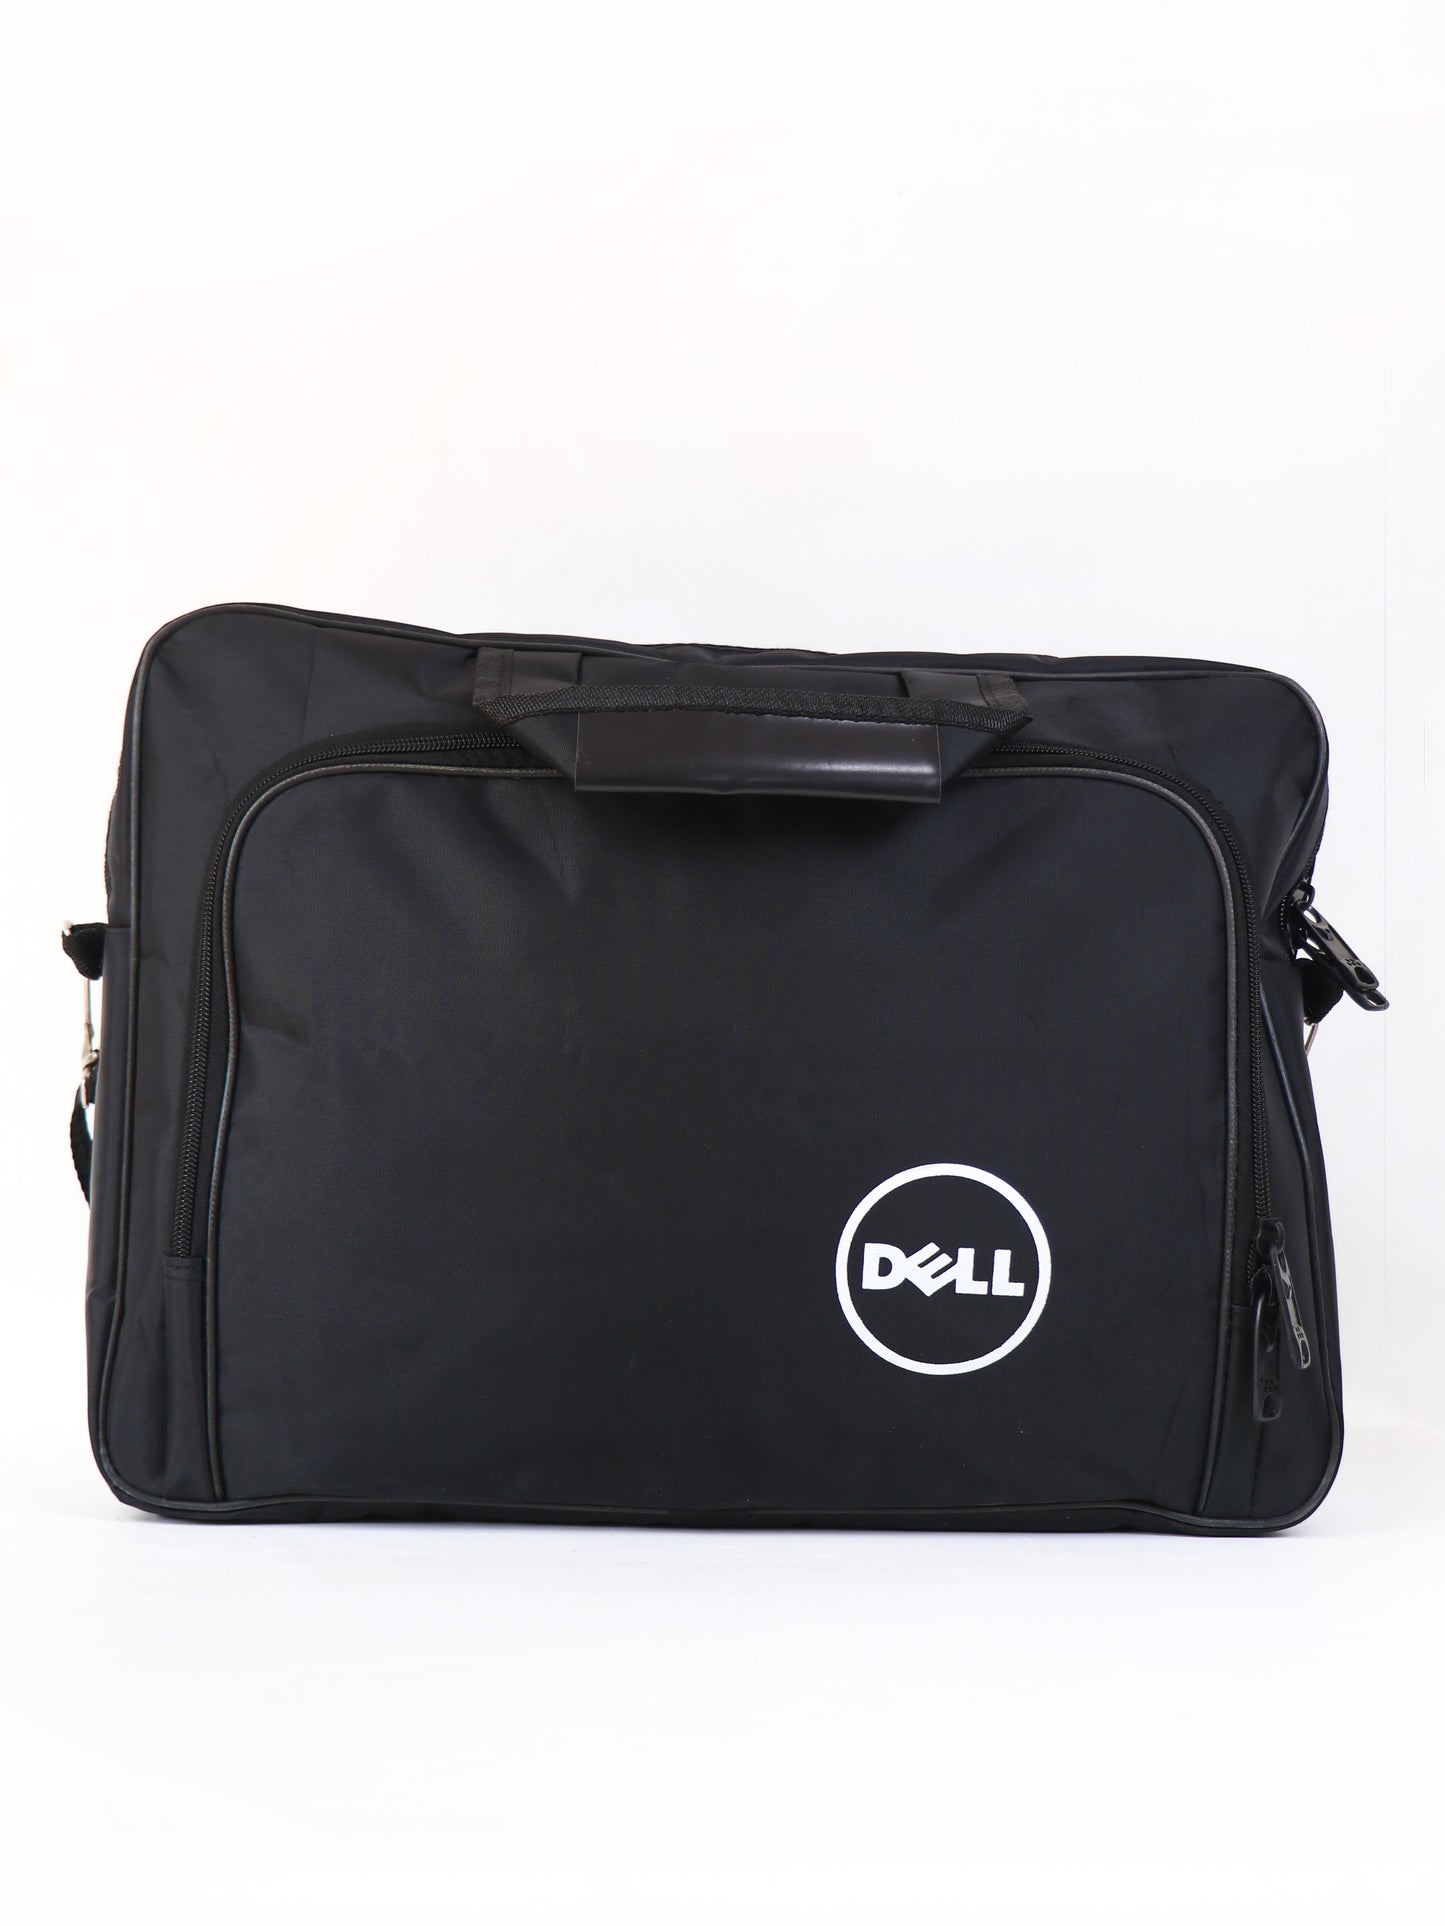 LB03 Dell Laptop Bag Black